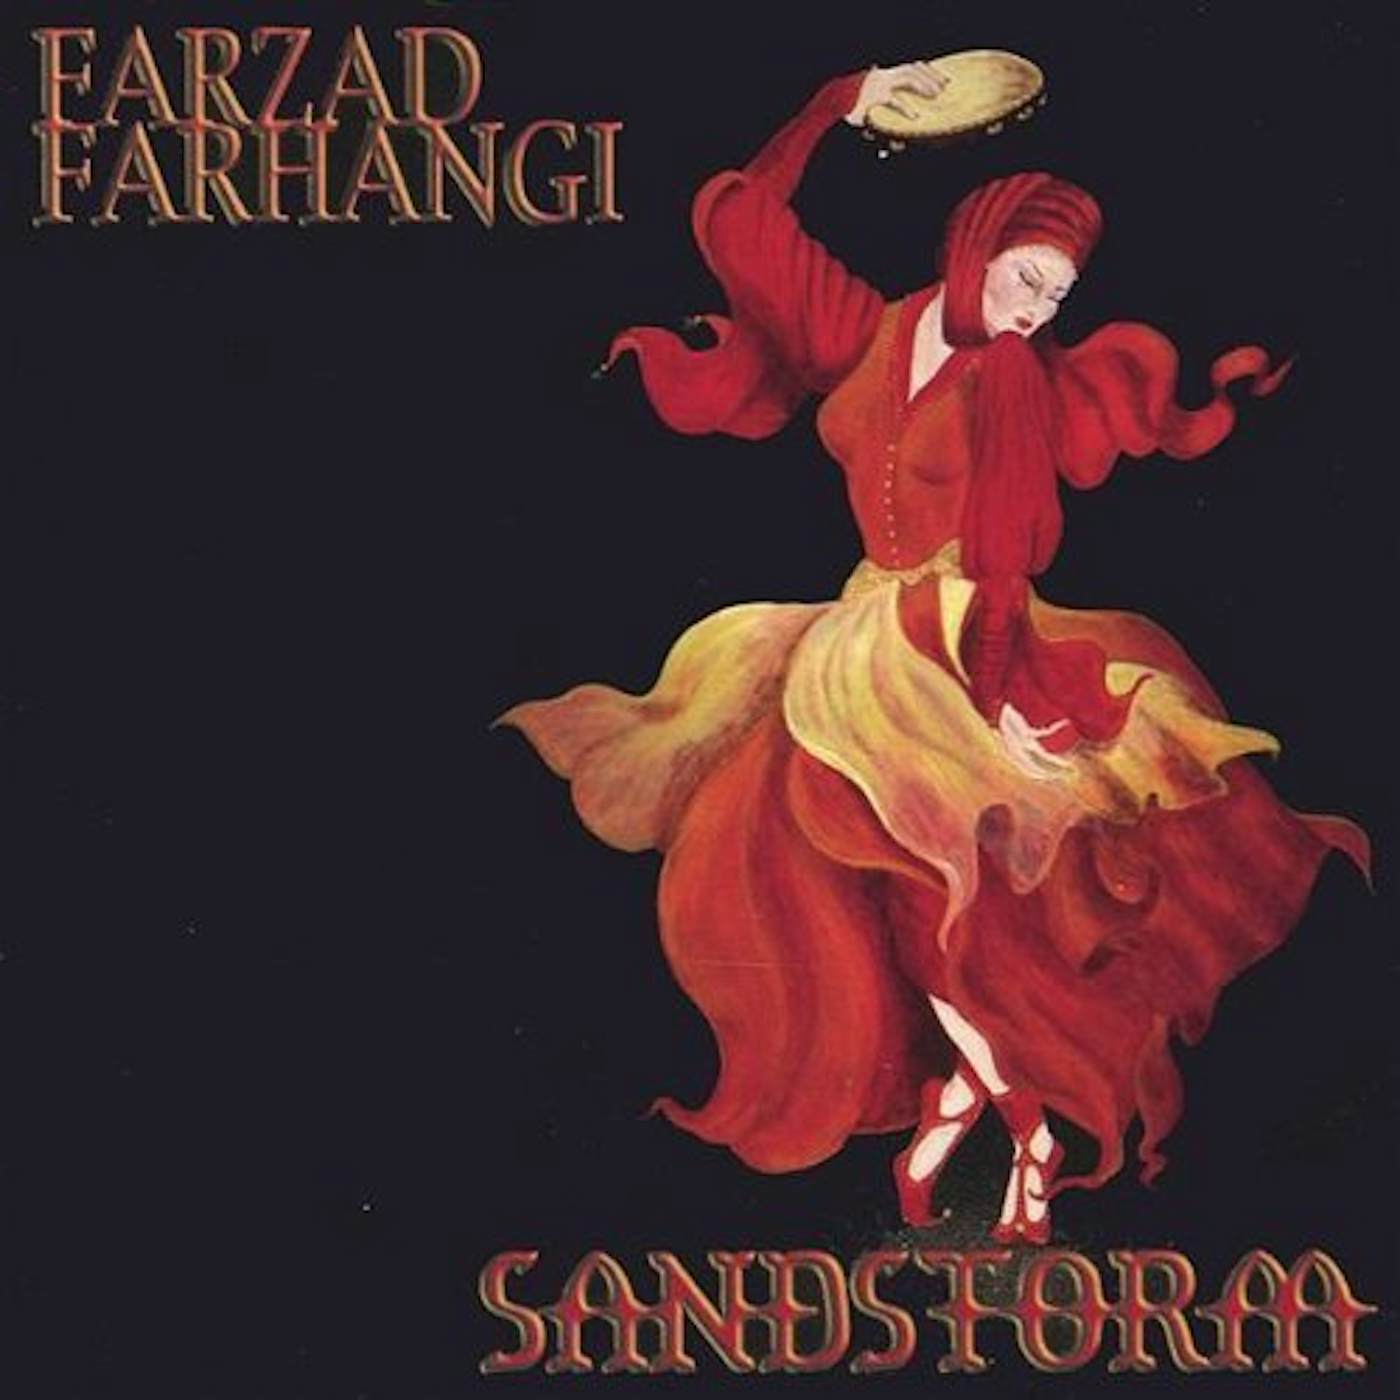 Farzad Farhangi SANDSTORM CD